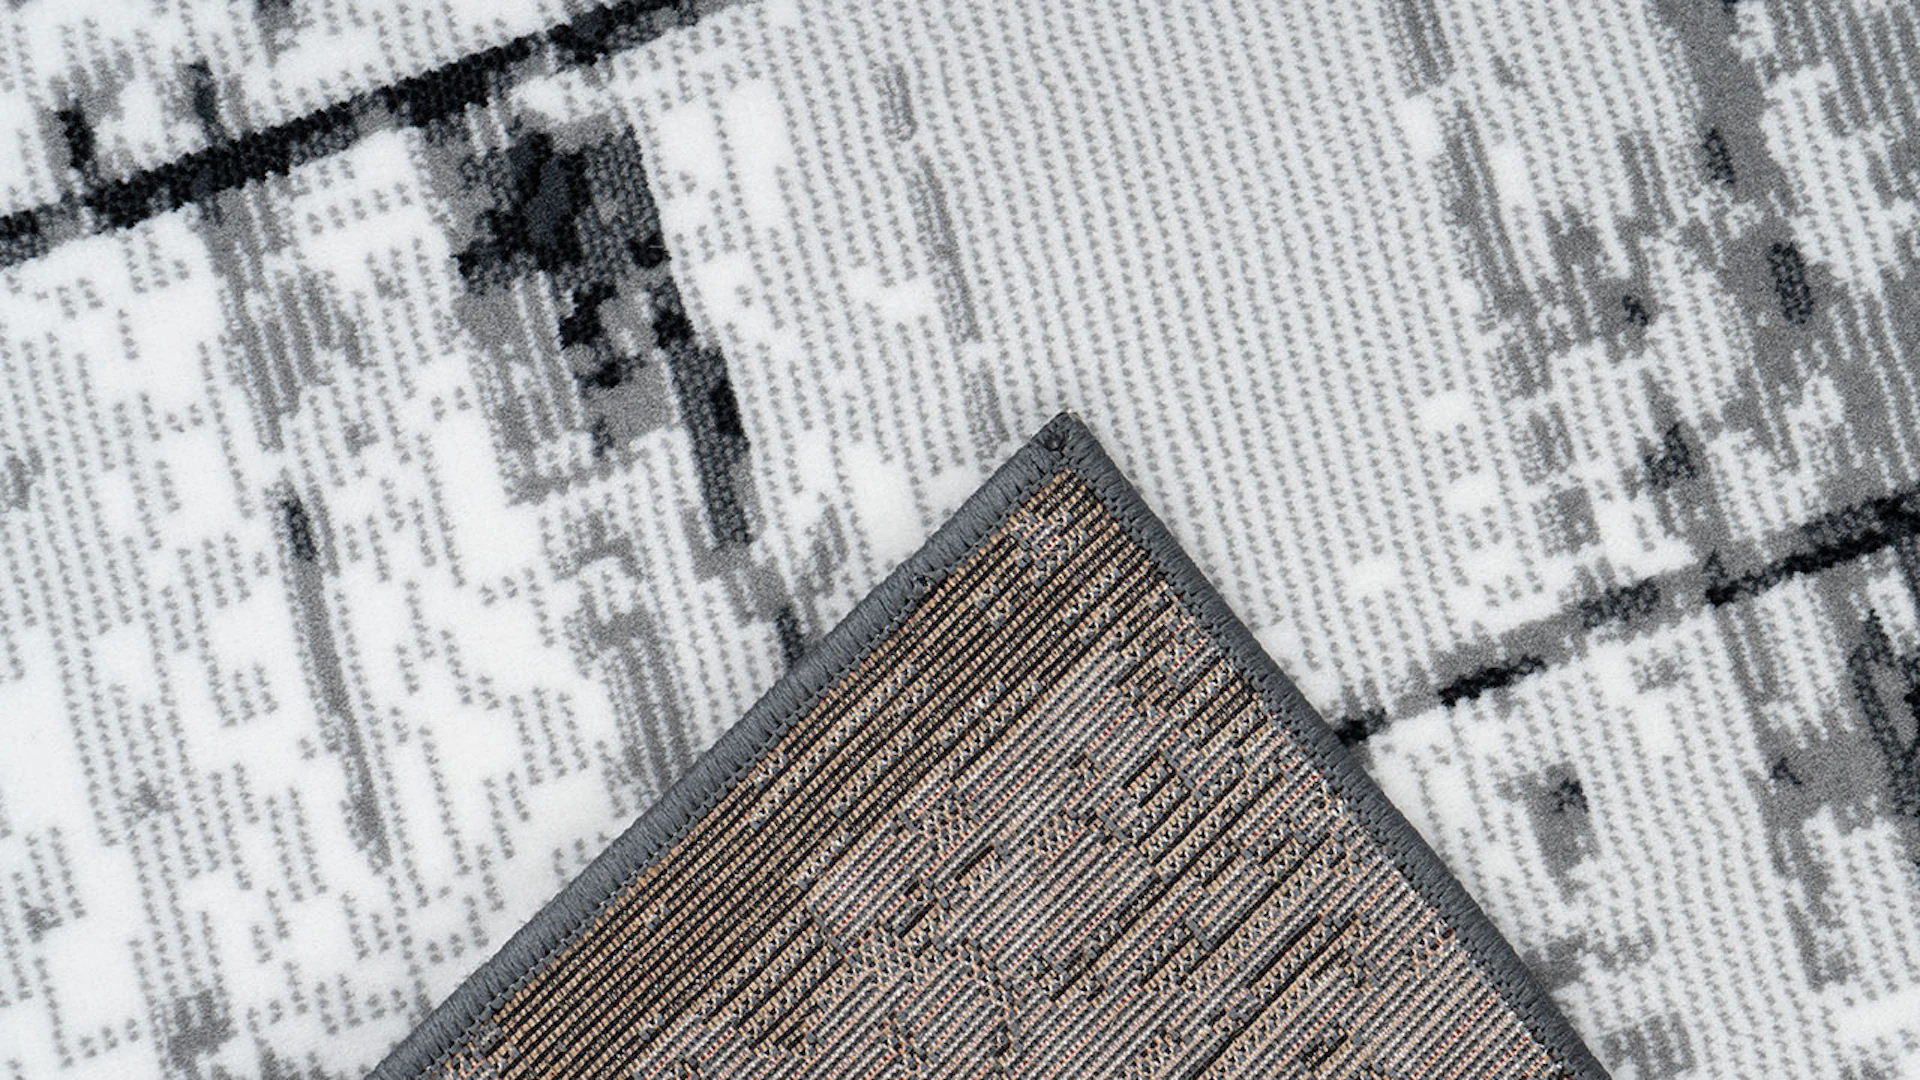 planeo carpet - Esperanto 325 grey / anthracite 120 x 170 cm